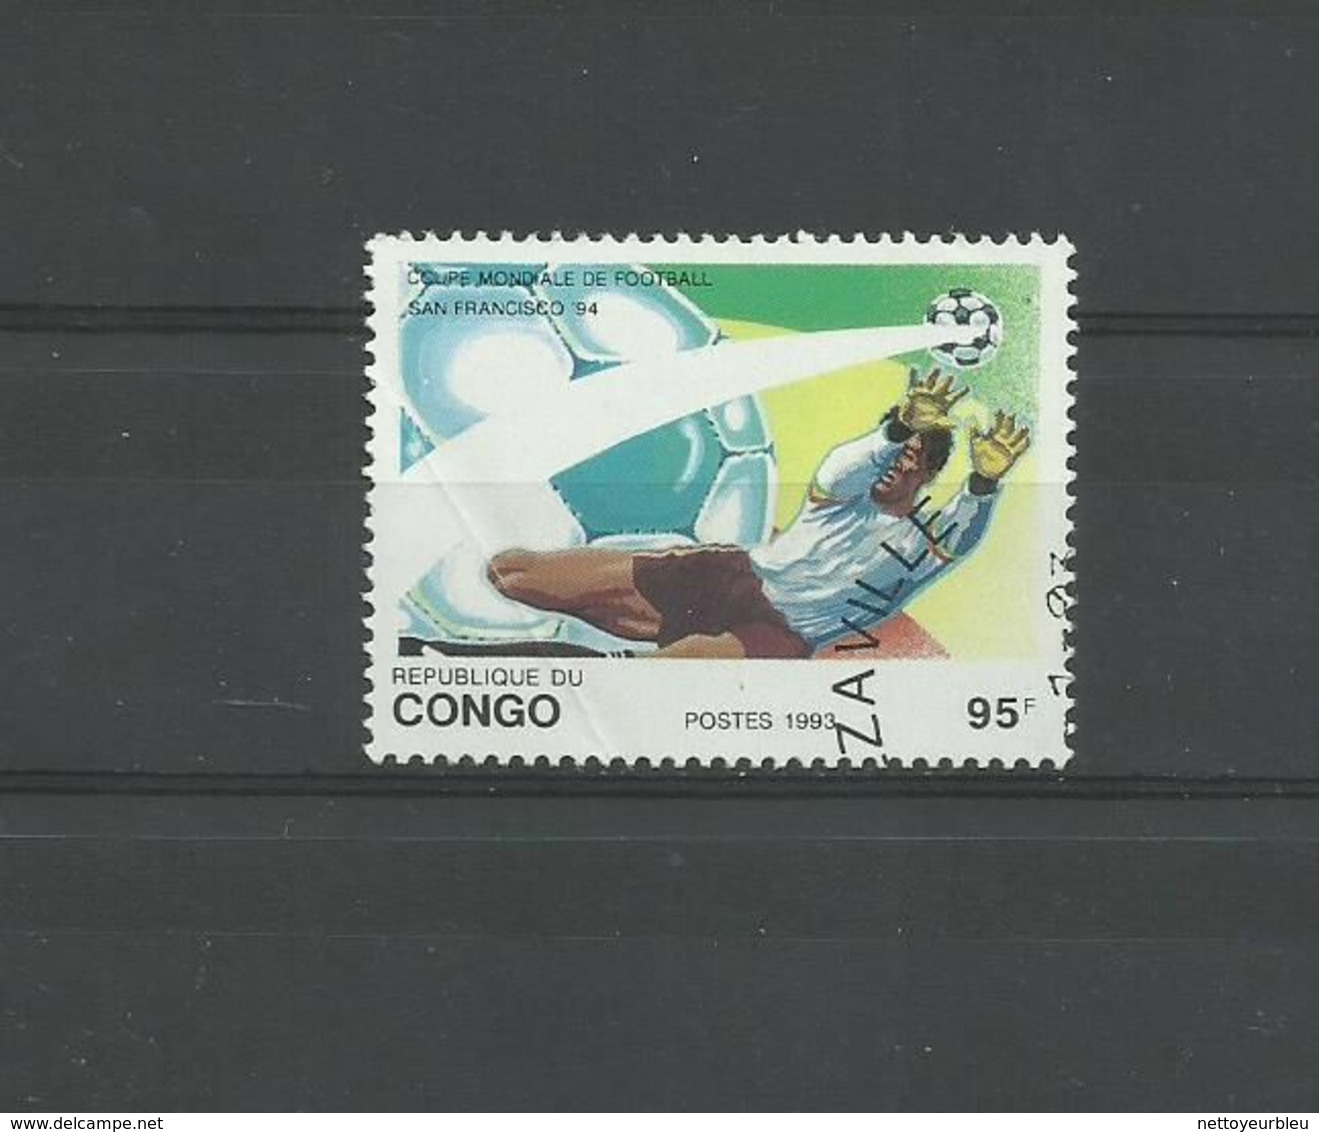 LOT TIMBRES REPUBLIQUE DU CONGO FOOTBALL OBLITERE - Sammlungen